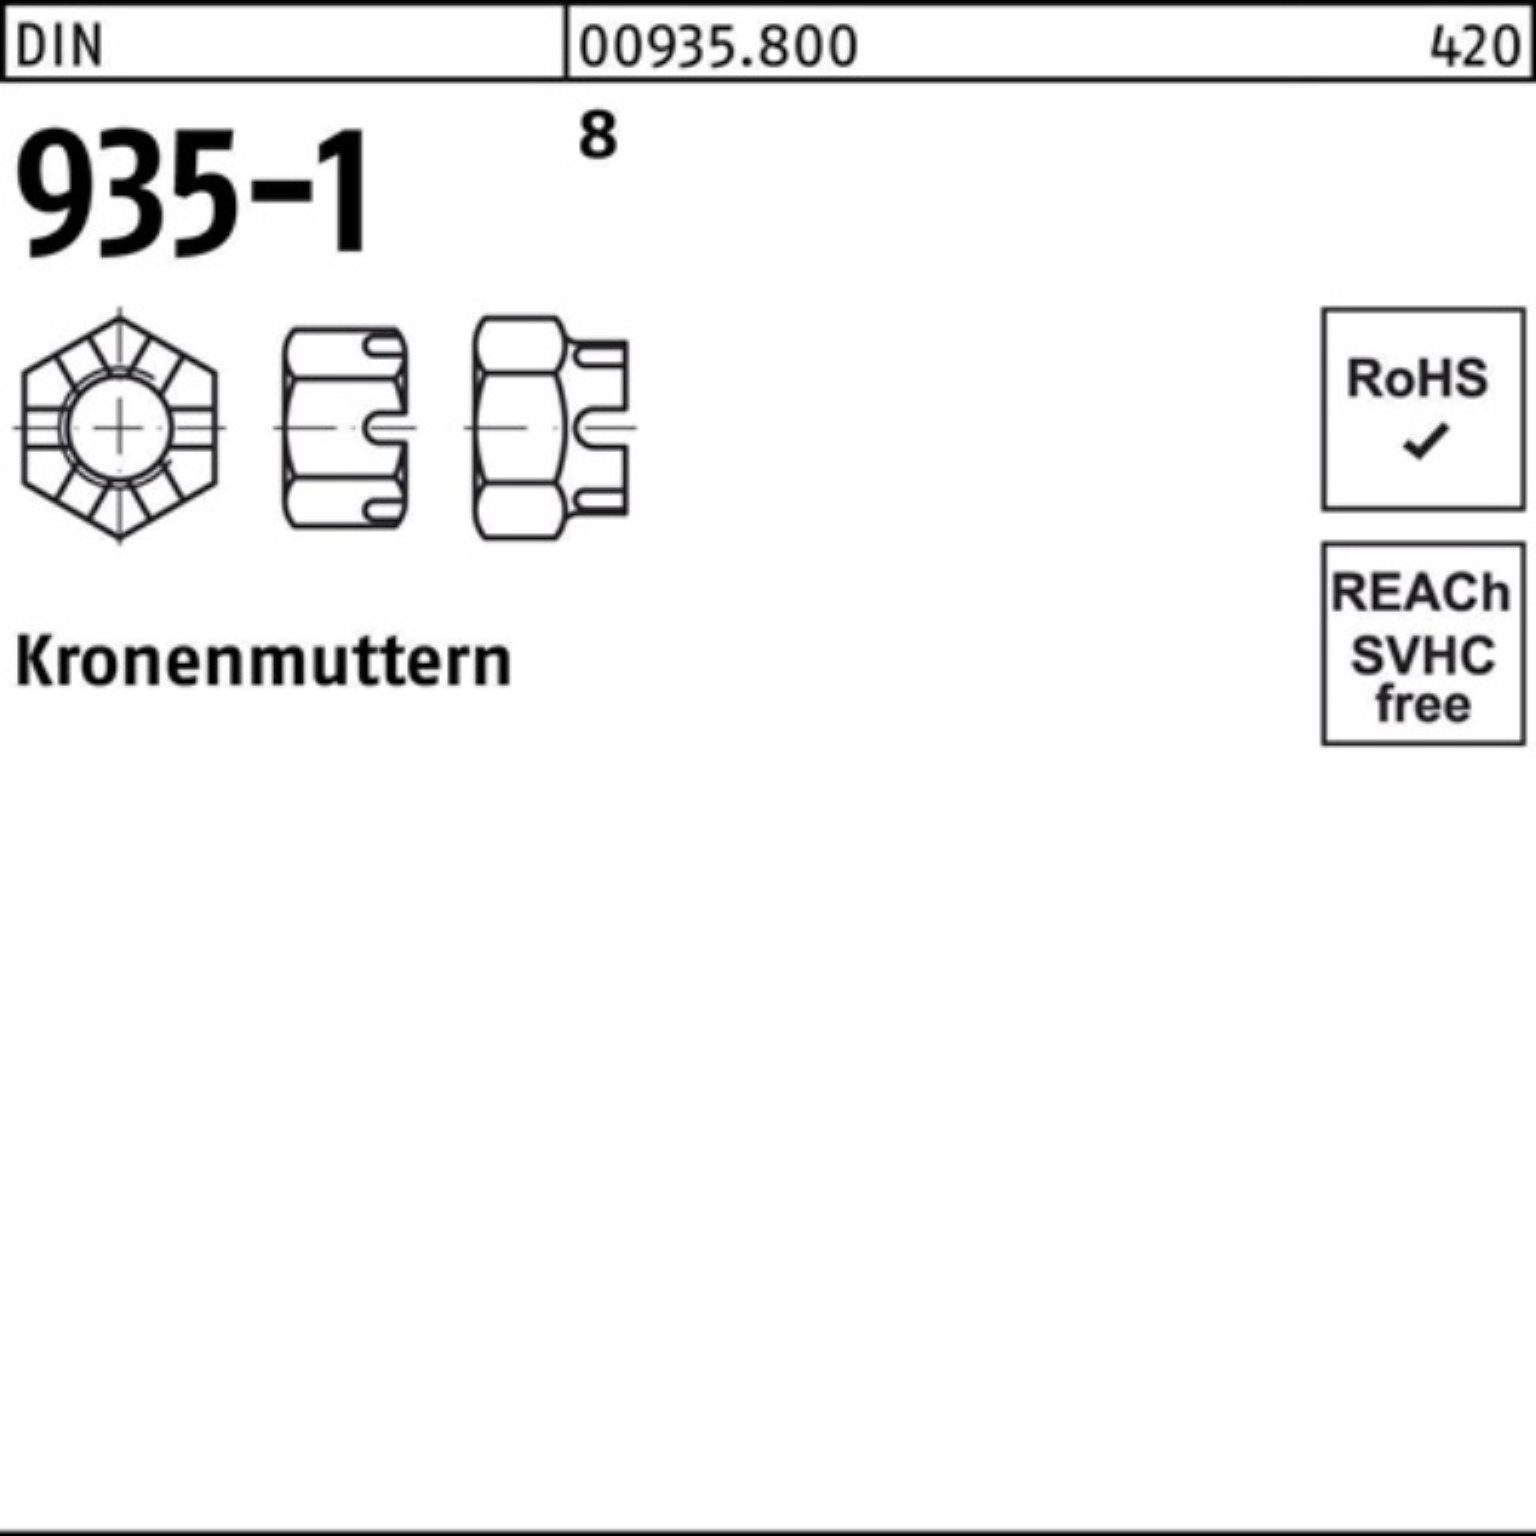 Reyher Kronenmutter 100er Pack Kronenmutter DIN 935-1 M39 8 1 Stück DIN 935-1 8 Kronenmut